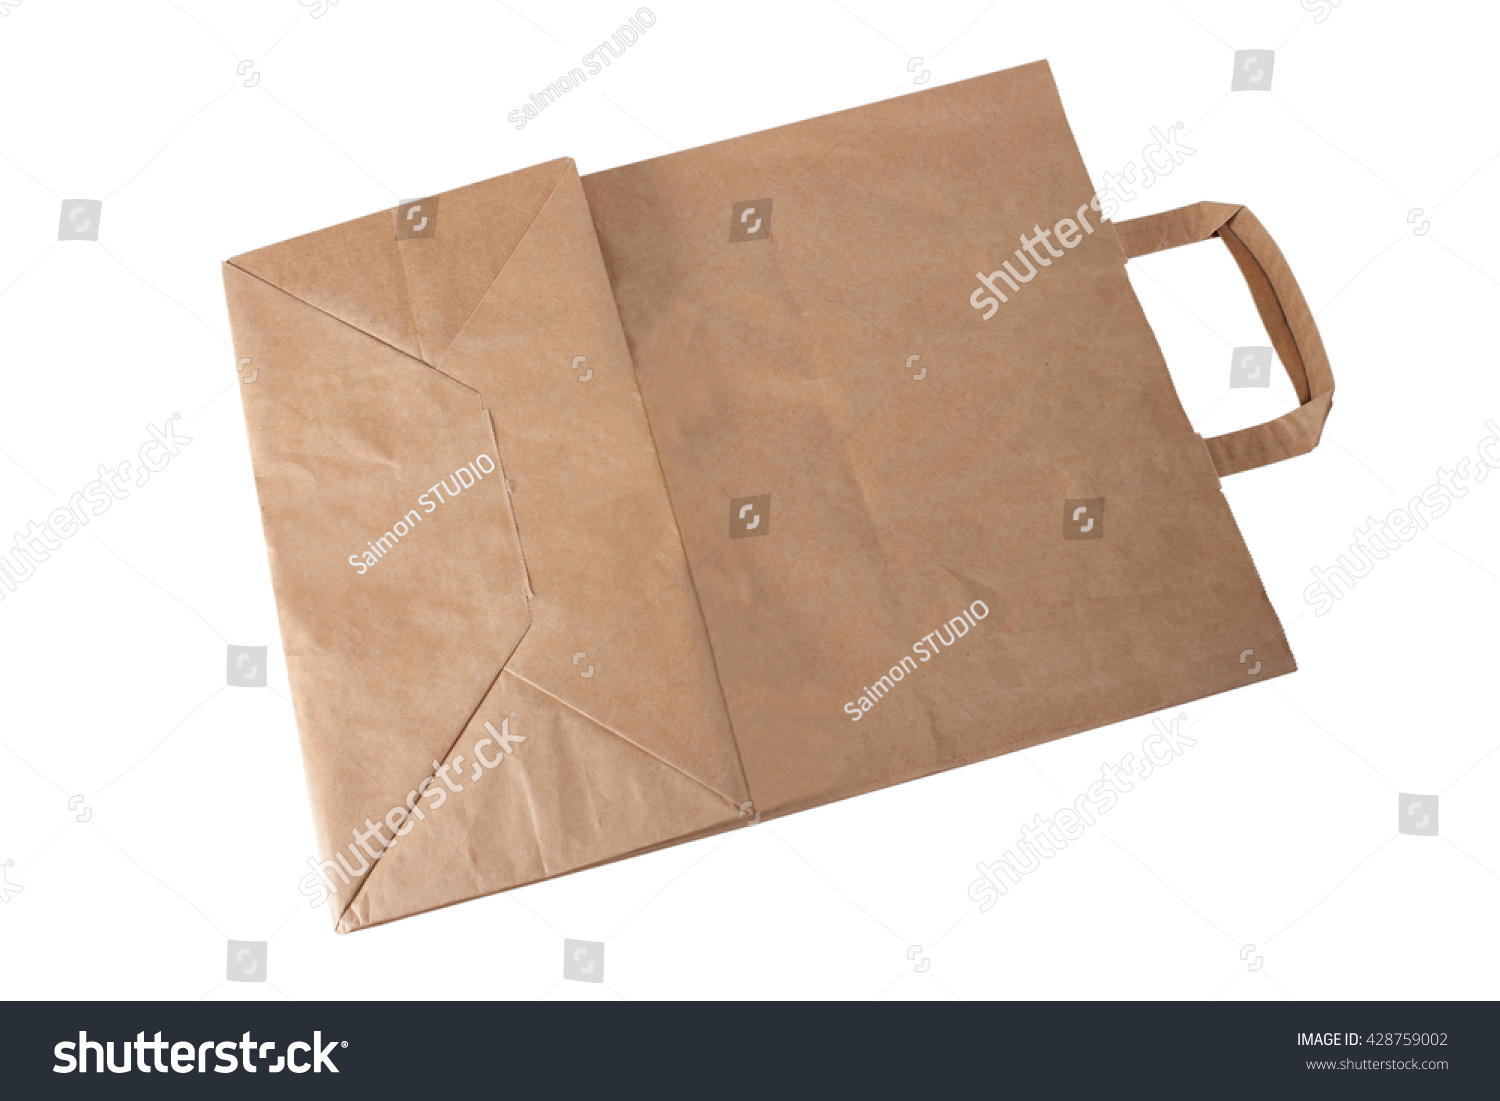 Paper Bag On White Background Stock Photo 428759002 : Shutterstock